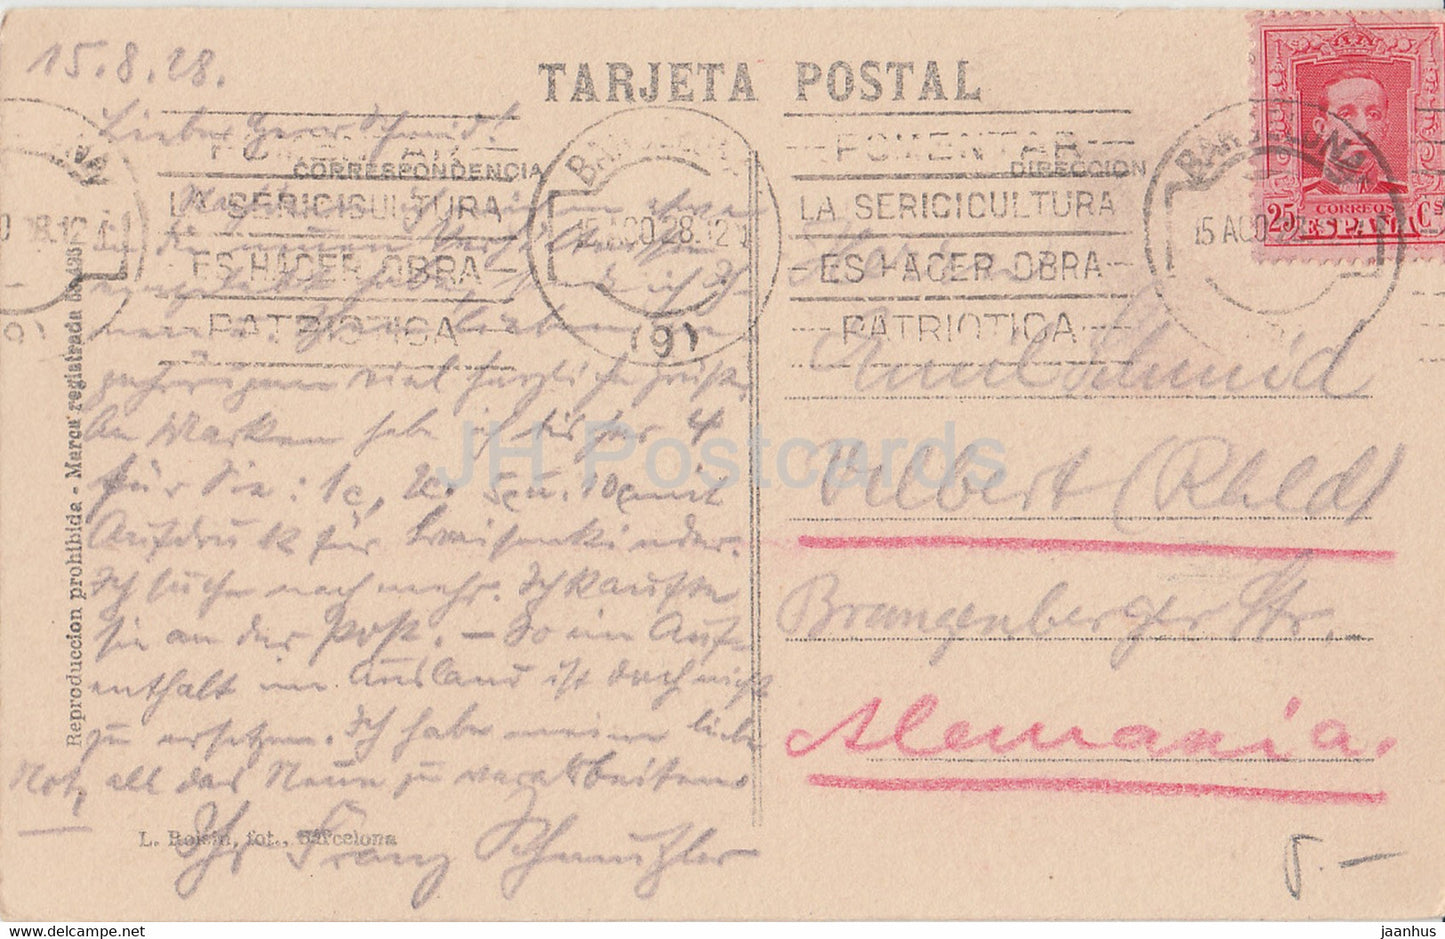 Barcelona - Arco del Triunfo - tram - 10 - old postcard - 1928 - Spain - used